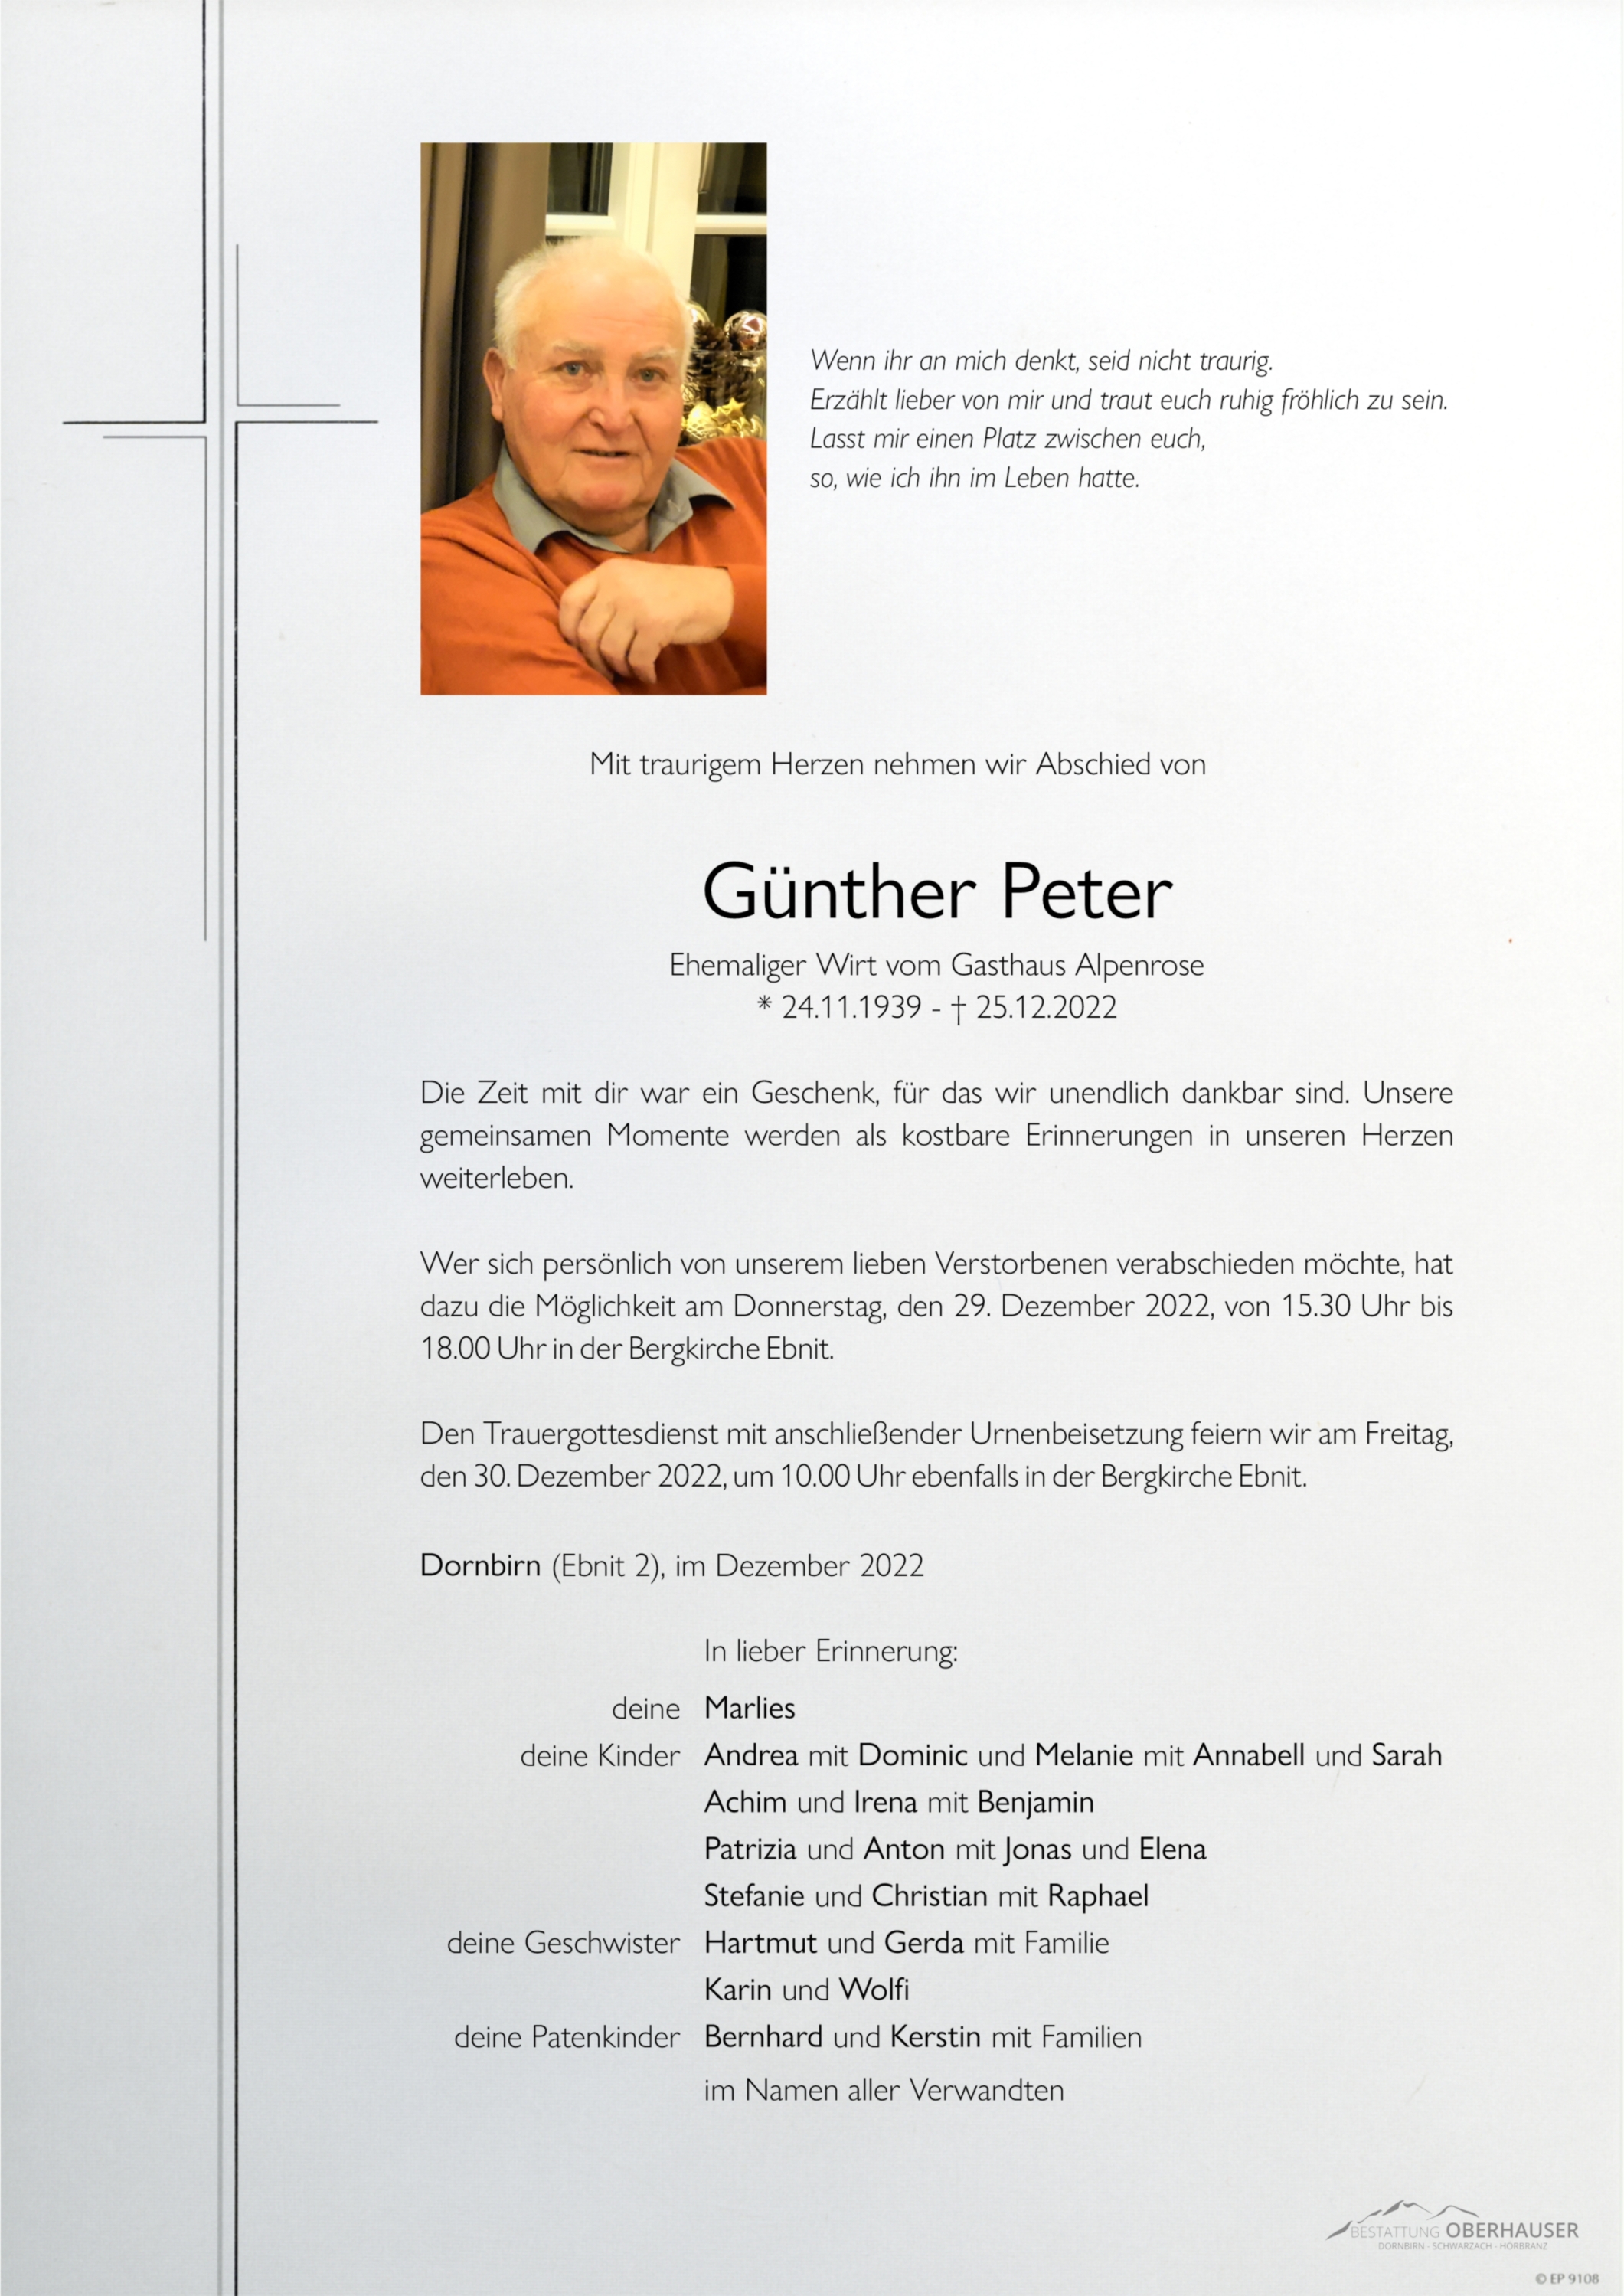 Günther Peter